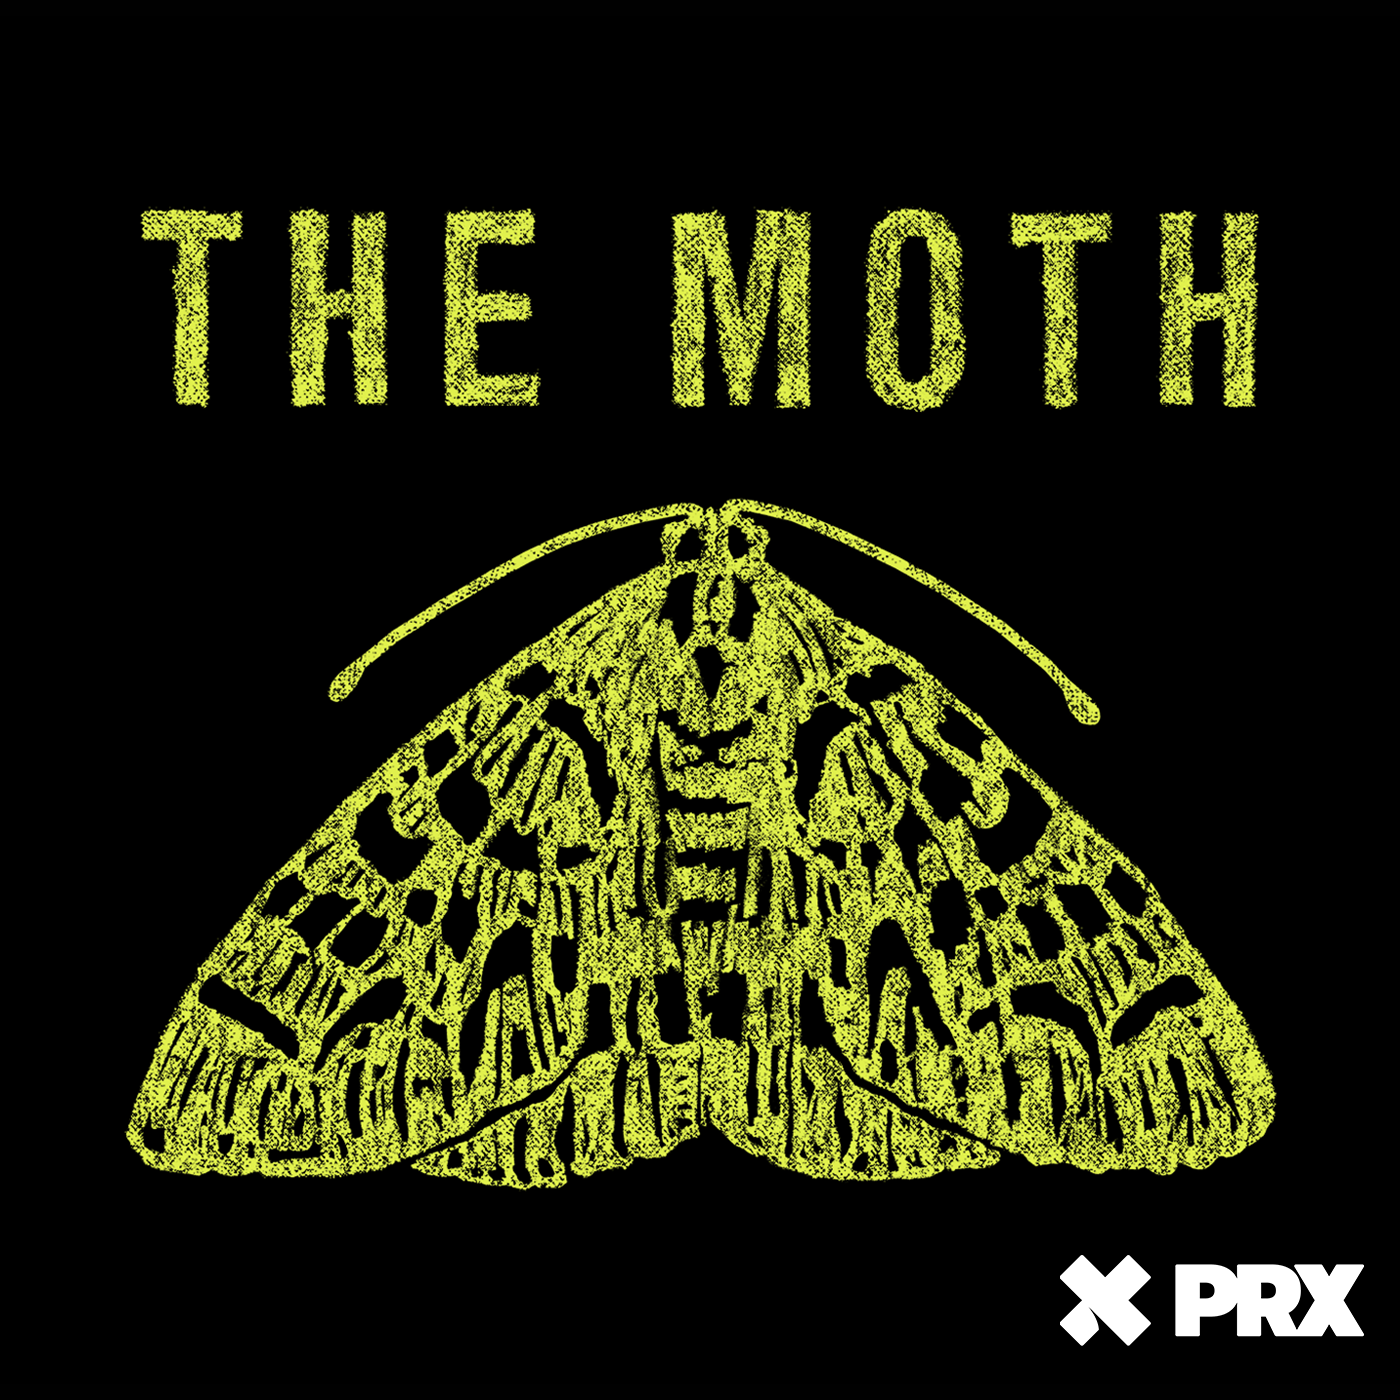 The Moth Radio Hour: The Moth StorySLAM